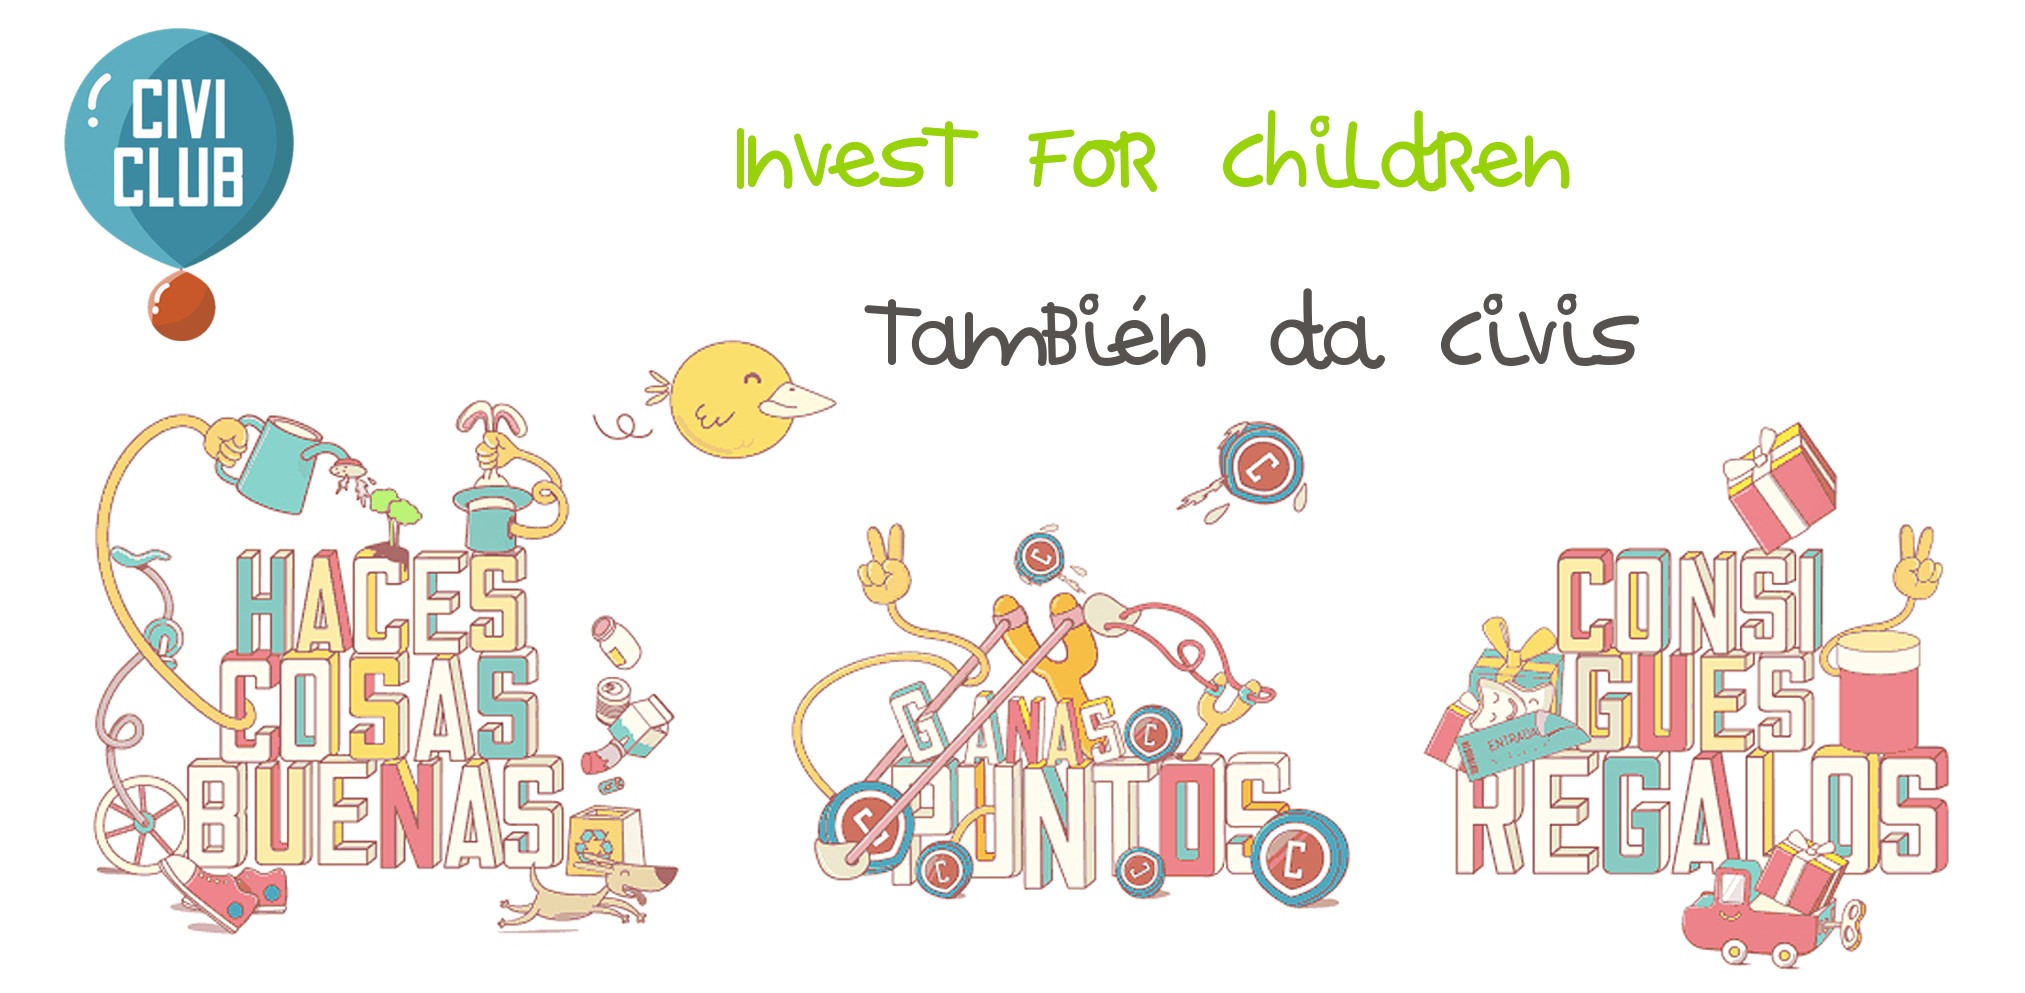 Invest for children también da civis